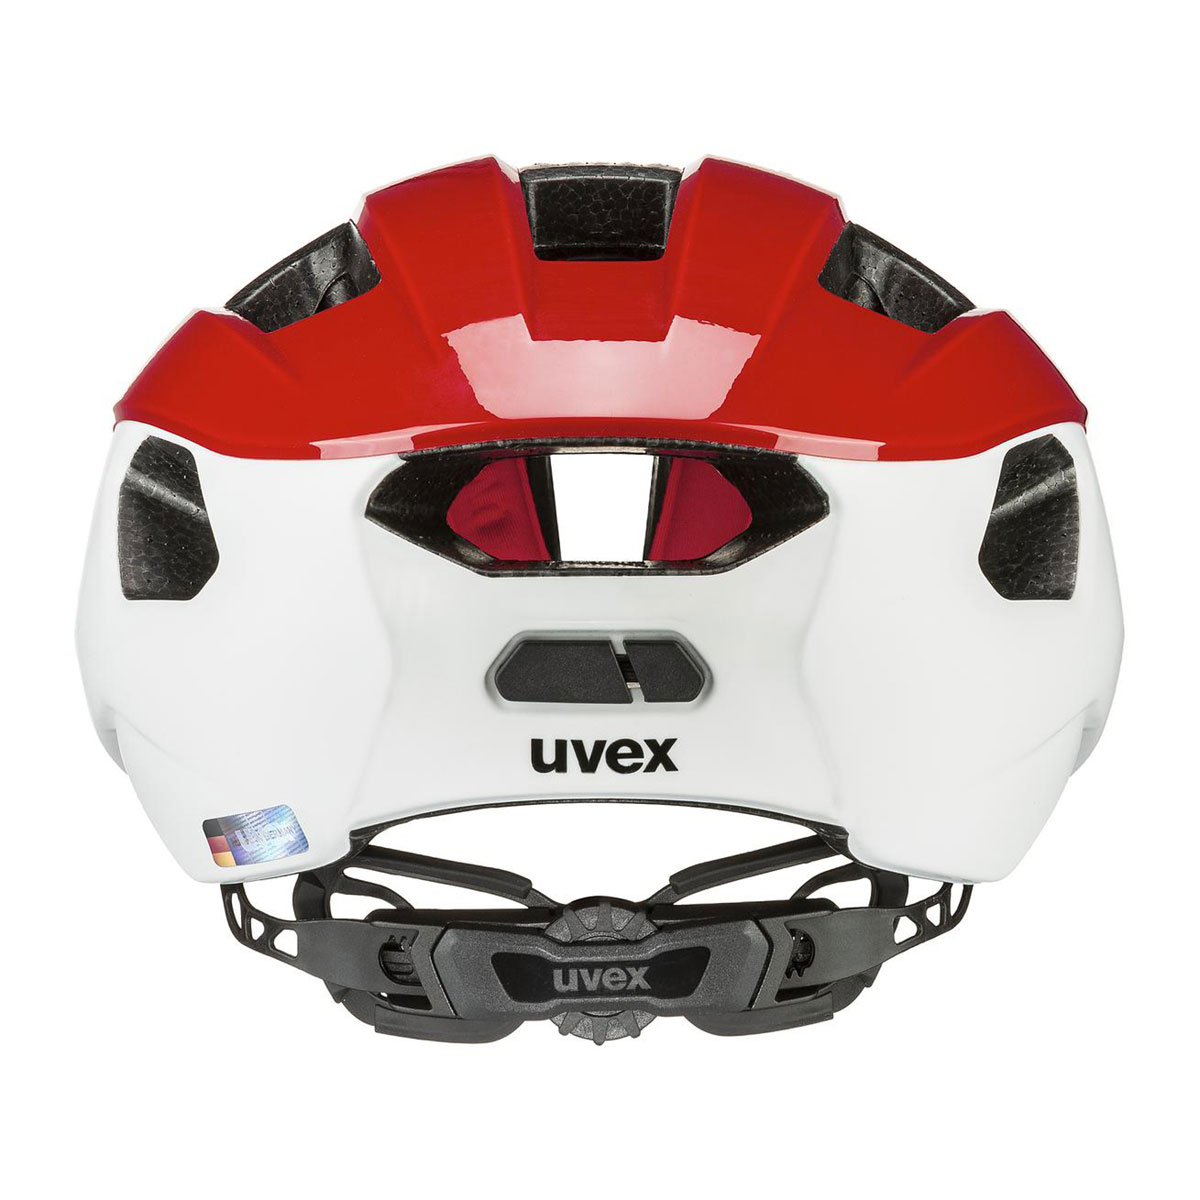 UVEX Rise Cc Red - White Mat (s4100900300)